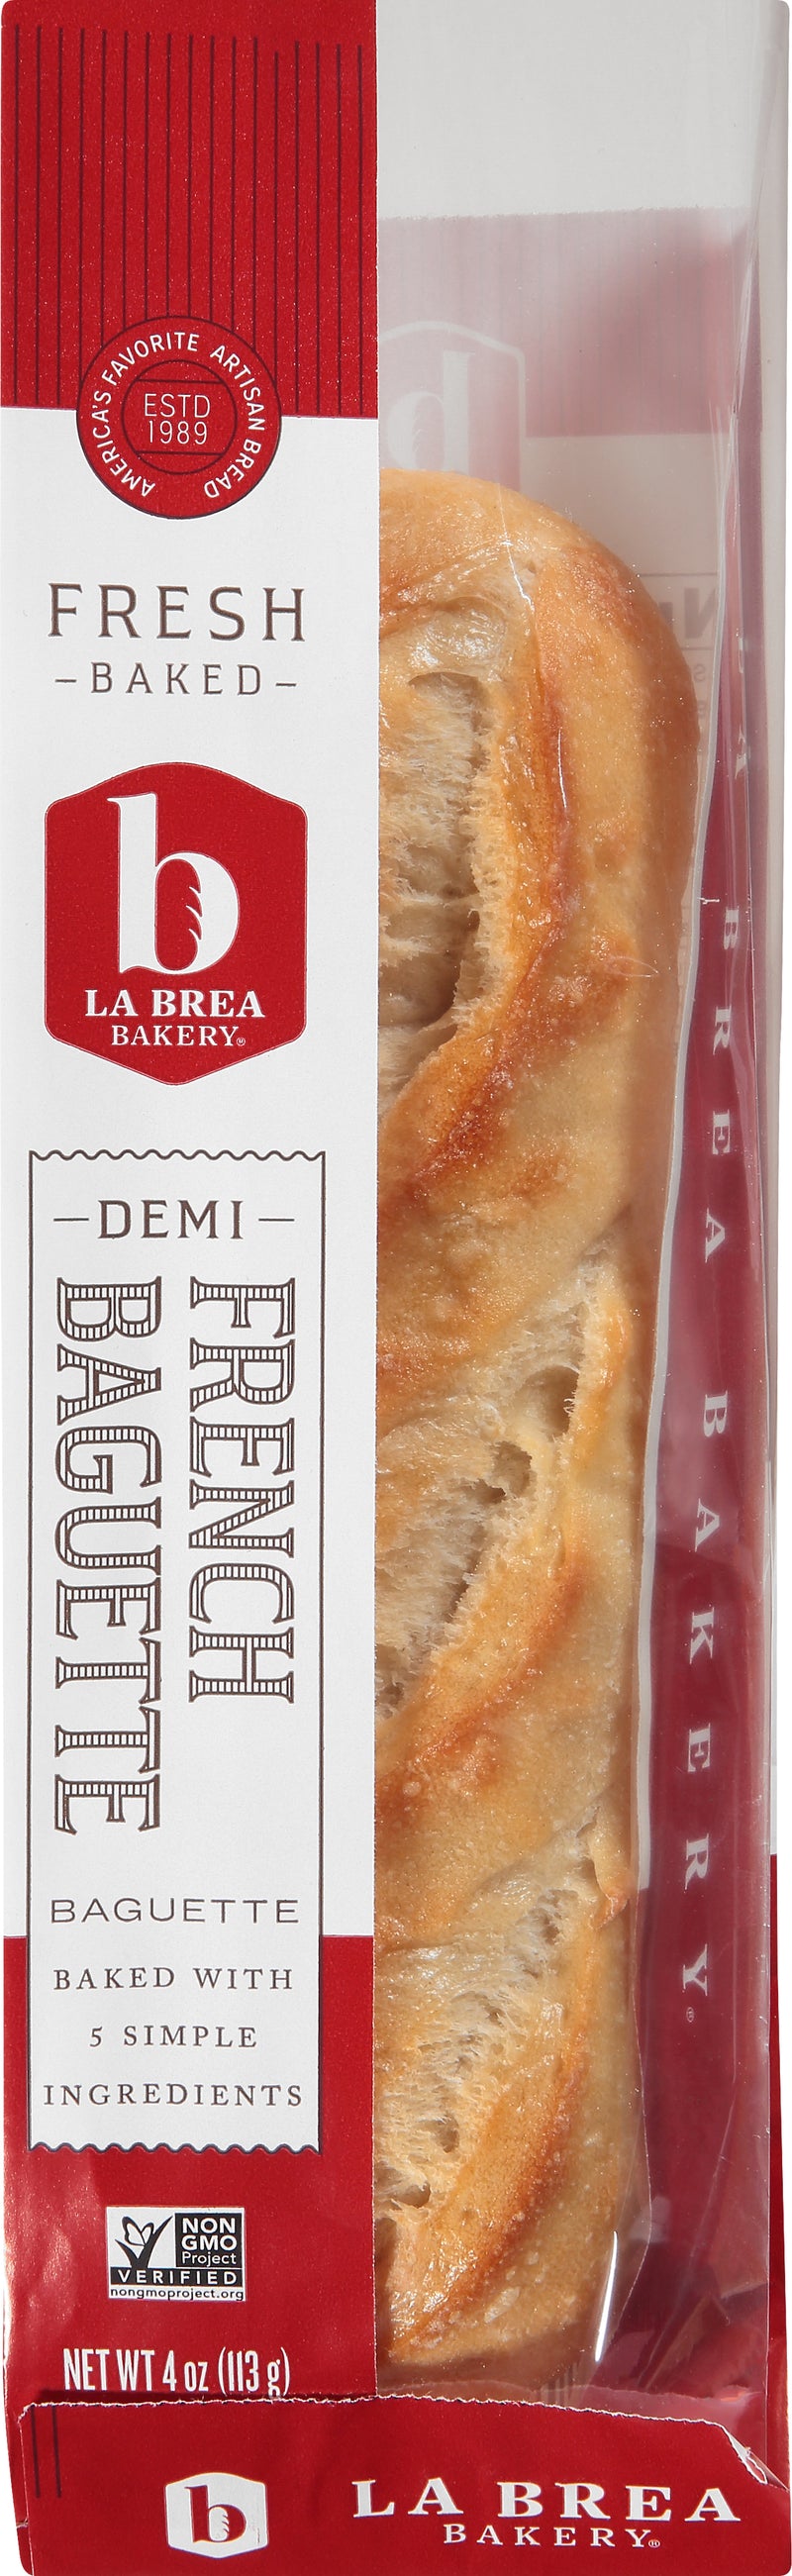 Bread French Demi Baguette Parbaked Frozen Retail 4.66 Ounce Size - 48 Per Case.